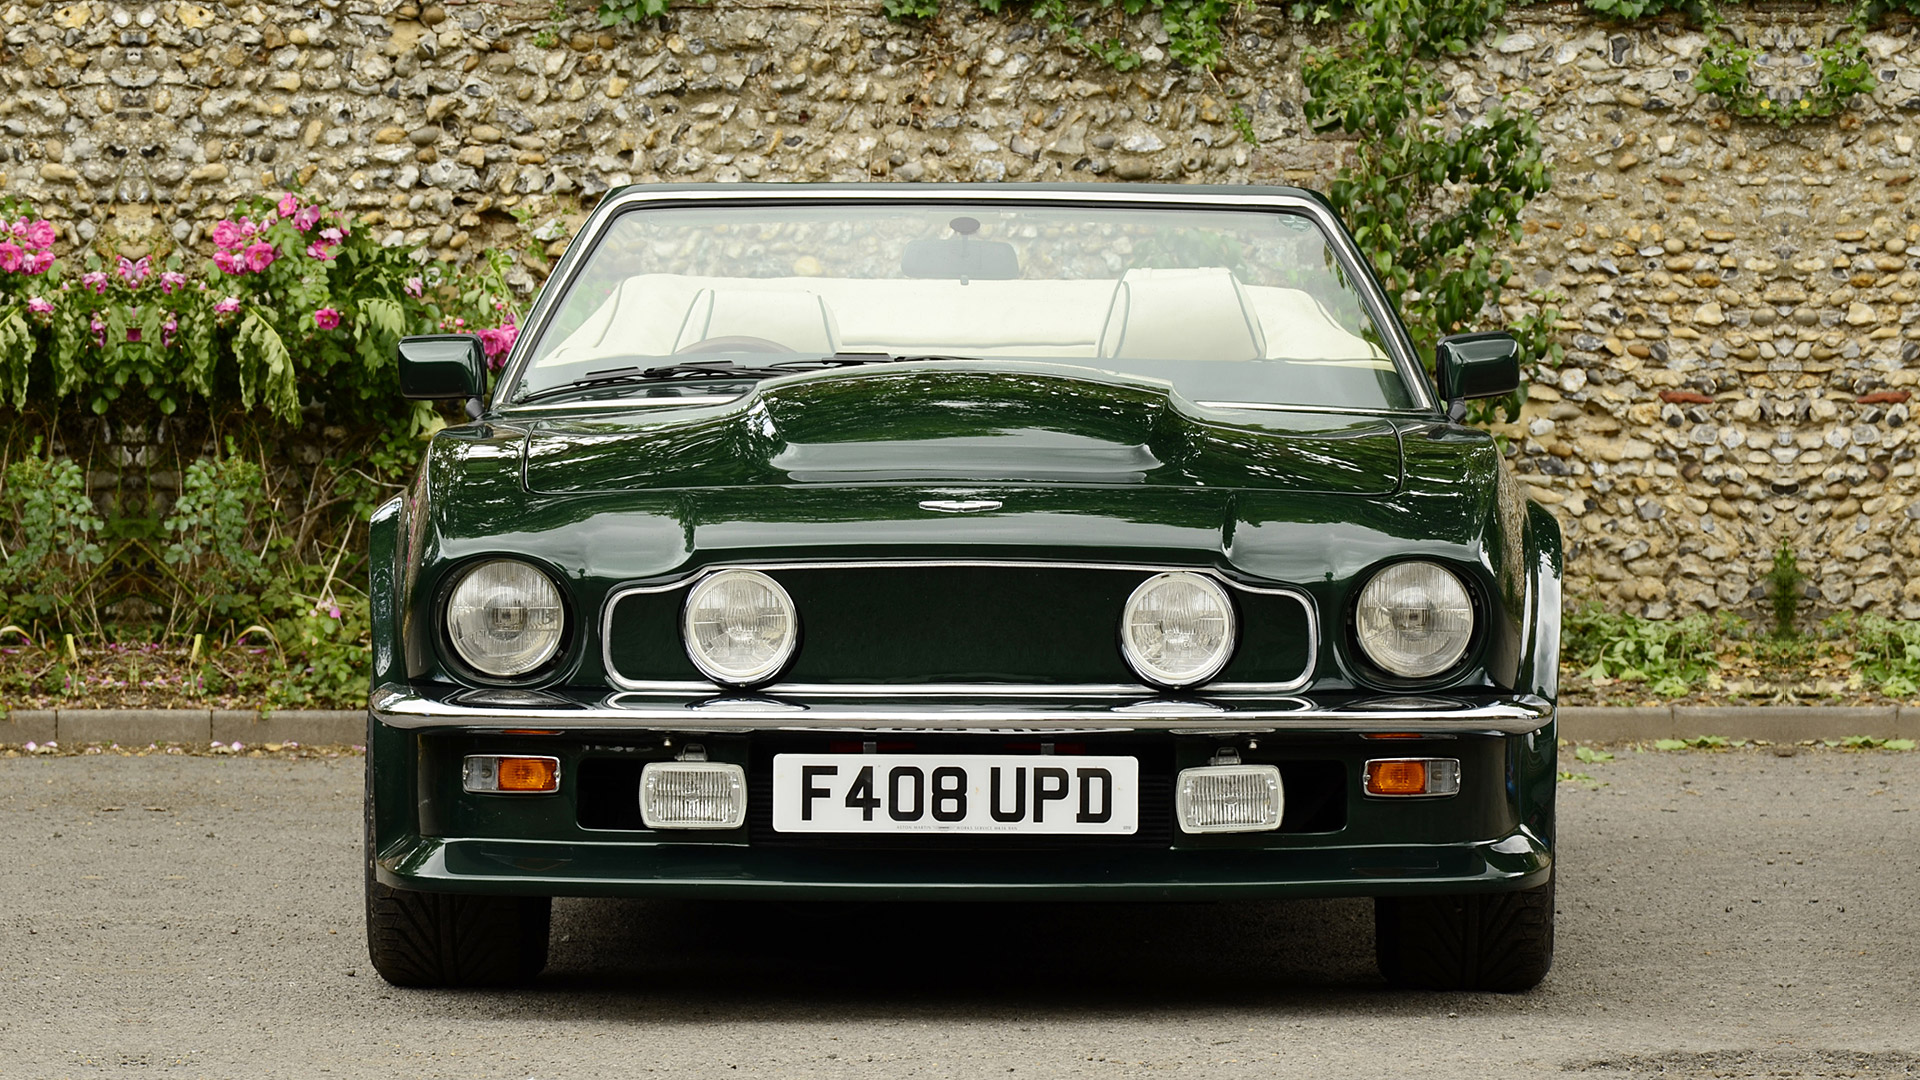  1984 Aston Martin V8 Vantage Volante Wallpaper.